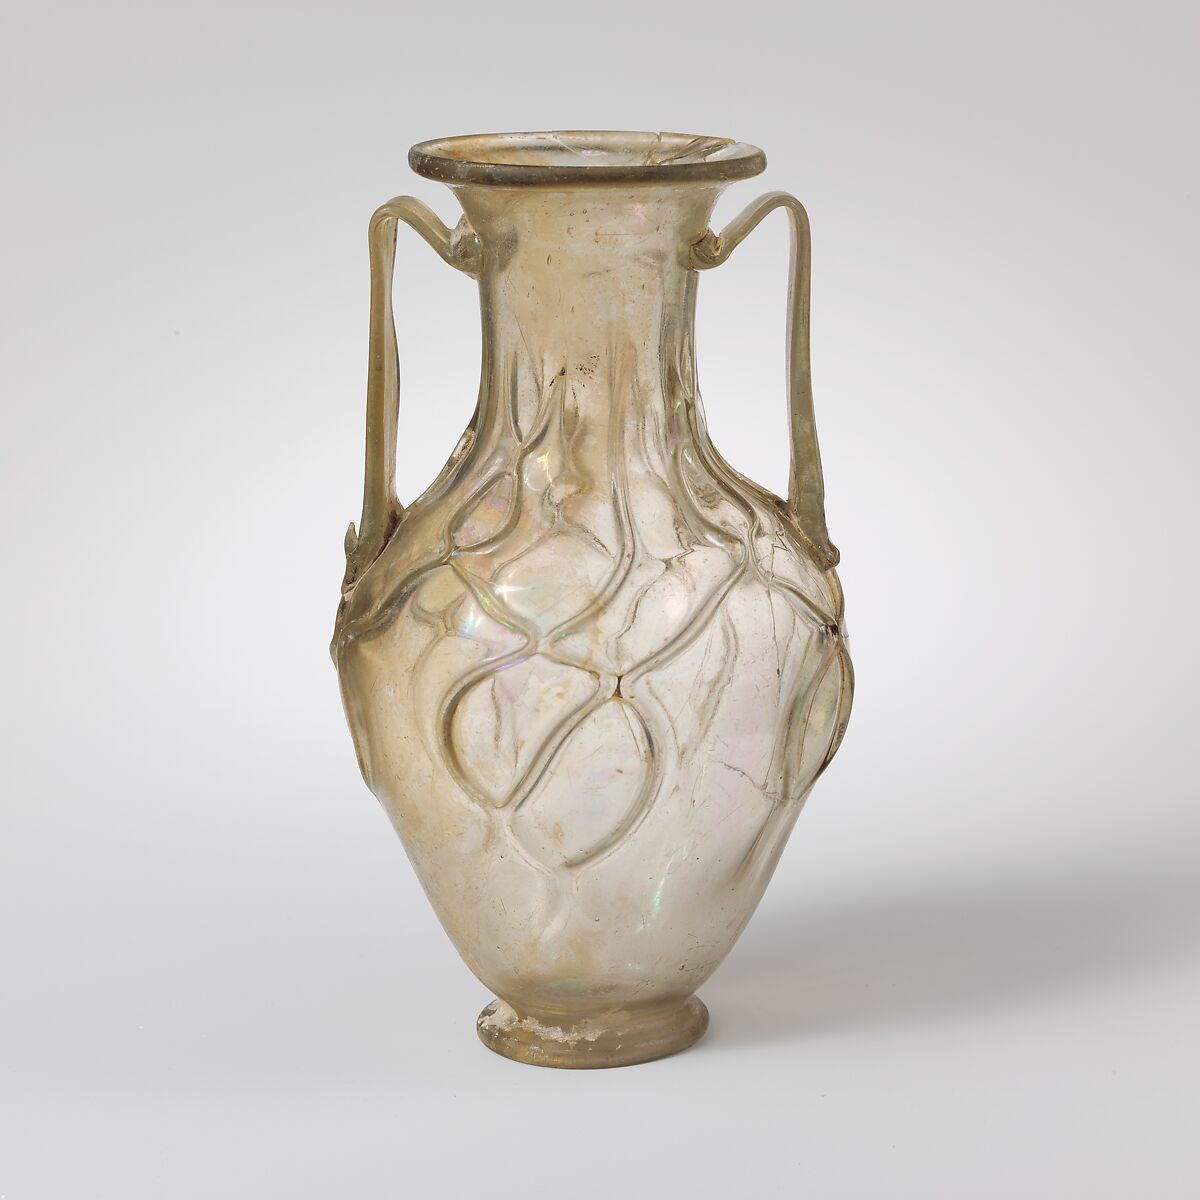 Glass jar with two handles (amphora), Glass, Roman 